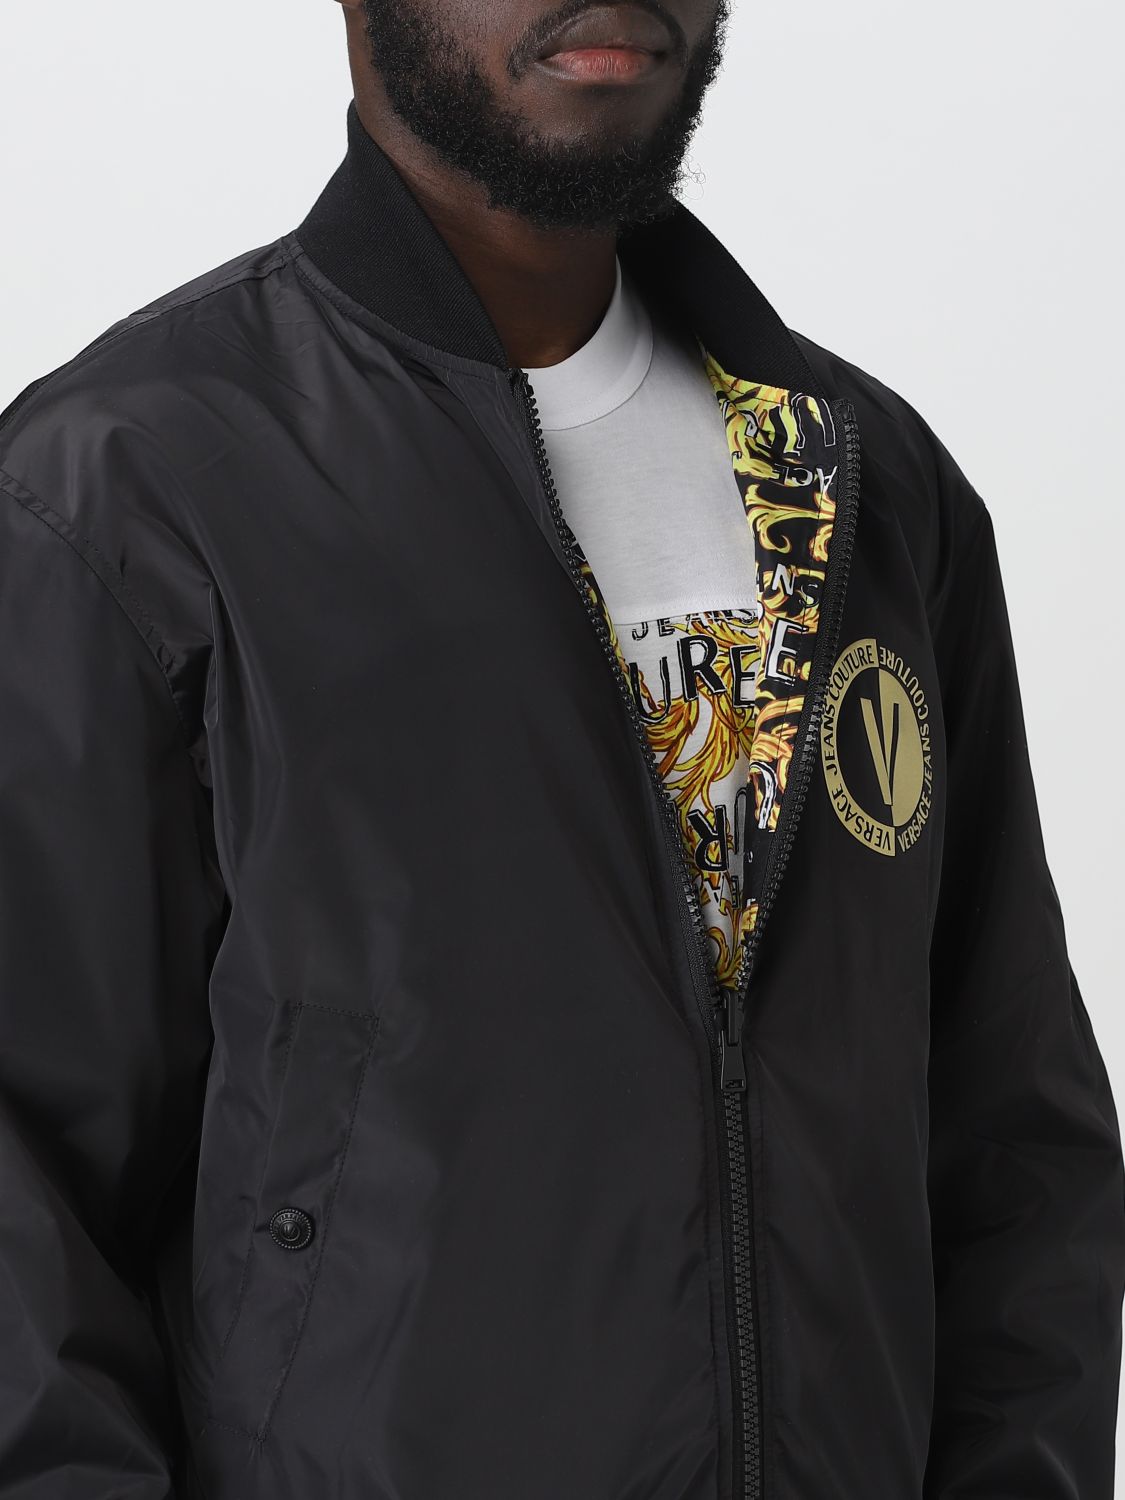 verdrievoudigen bouwer staart VERSACE JEANS COUTURE: jacket for man - Black | Versace Jeans Couture jacket  74GASD17CQS51 online on GIGLIO.COM